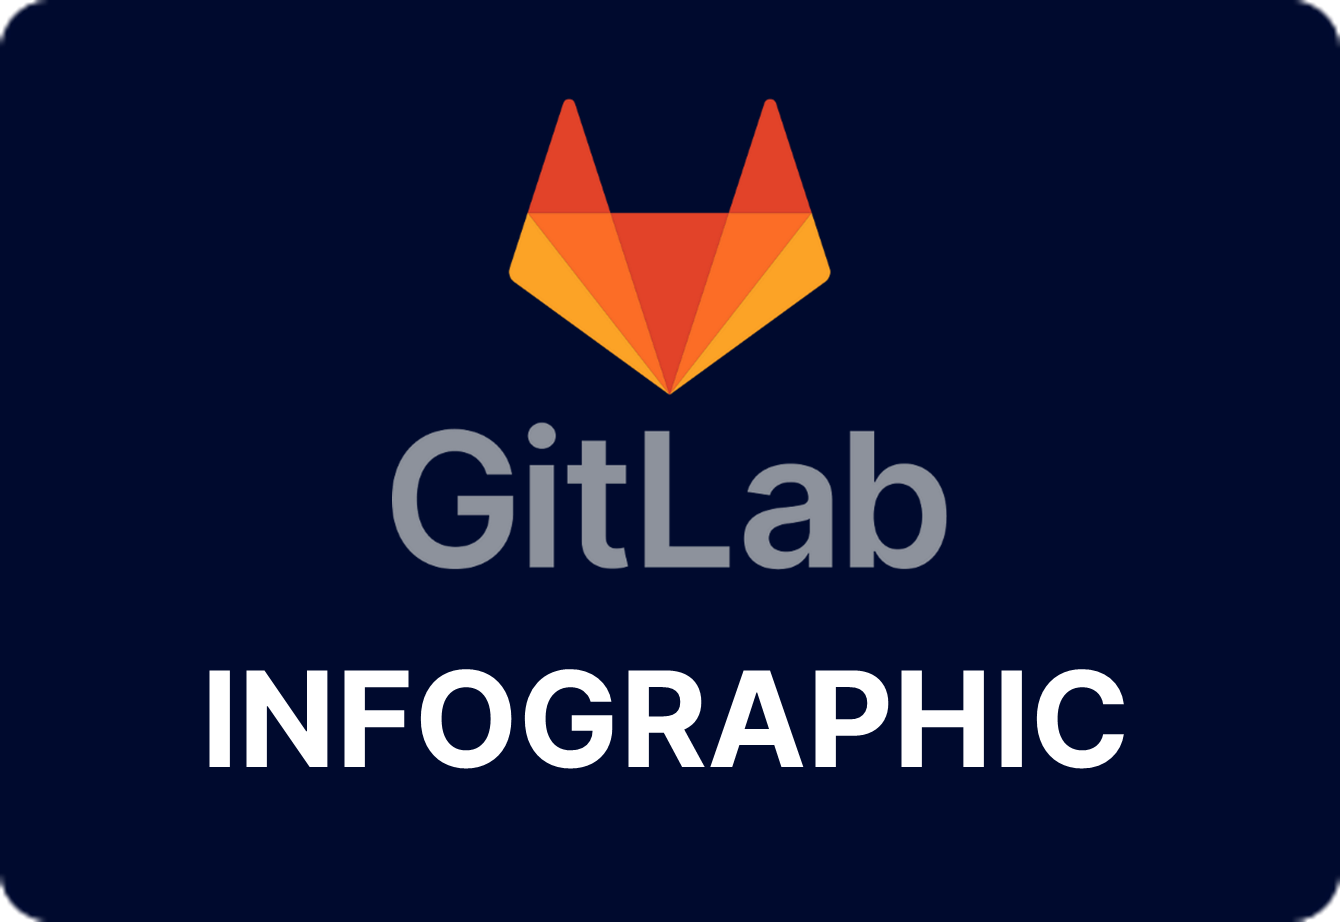 GitLab Infographic